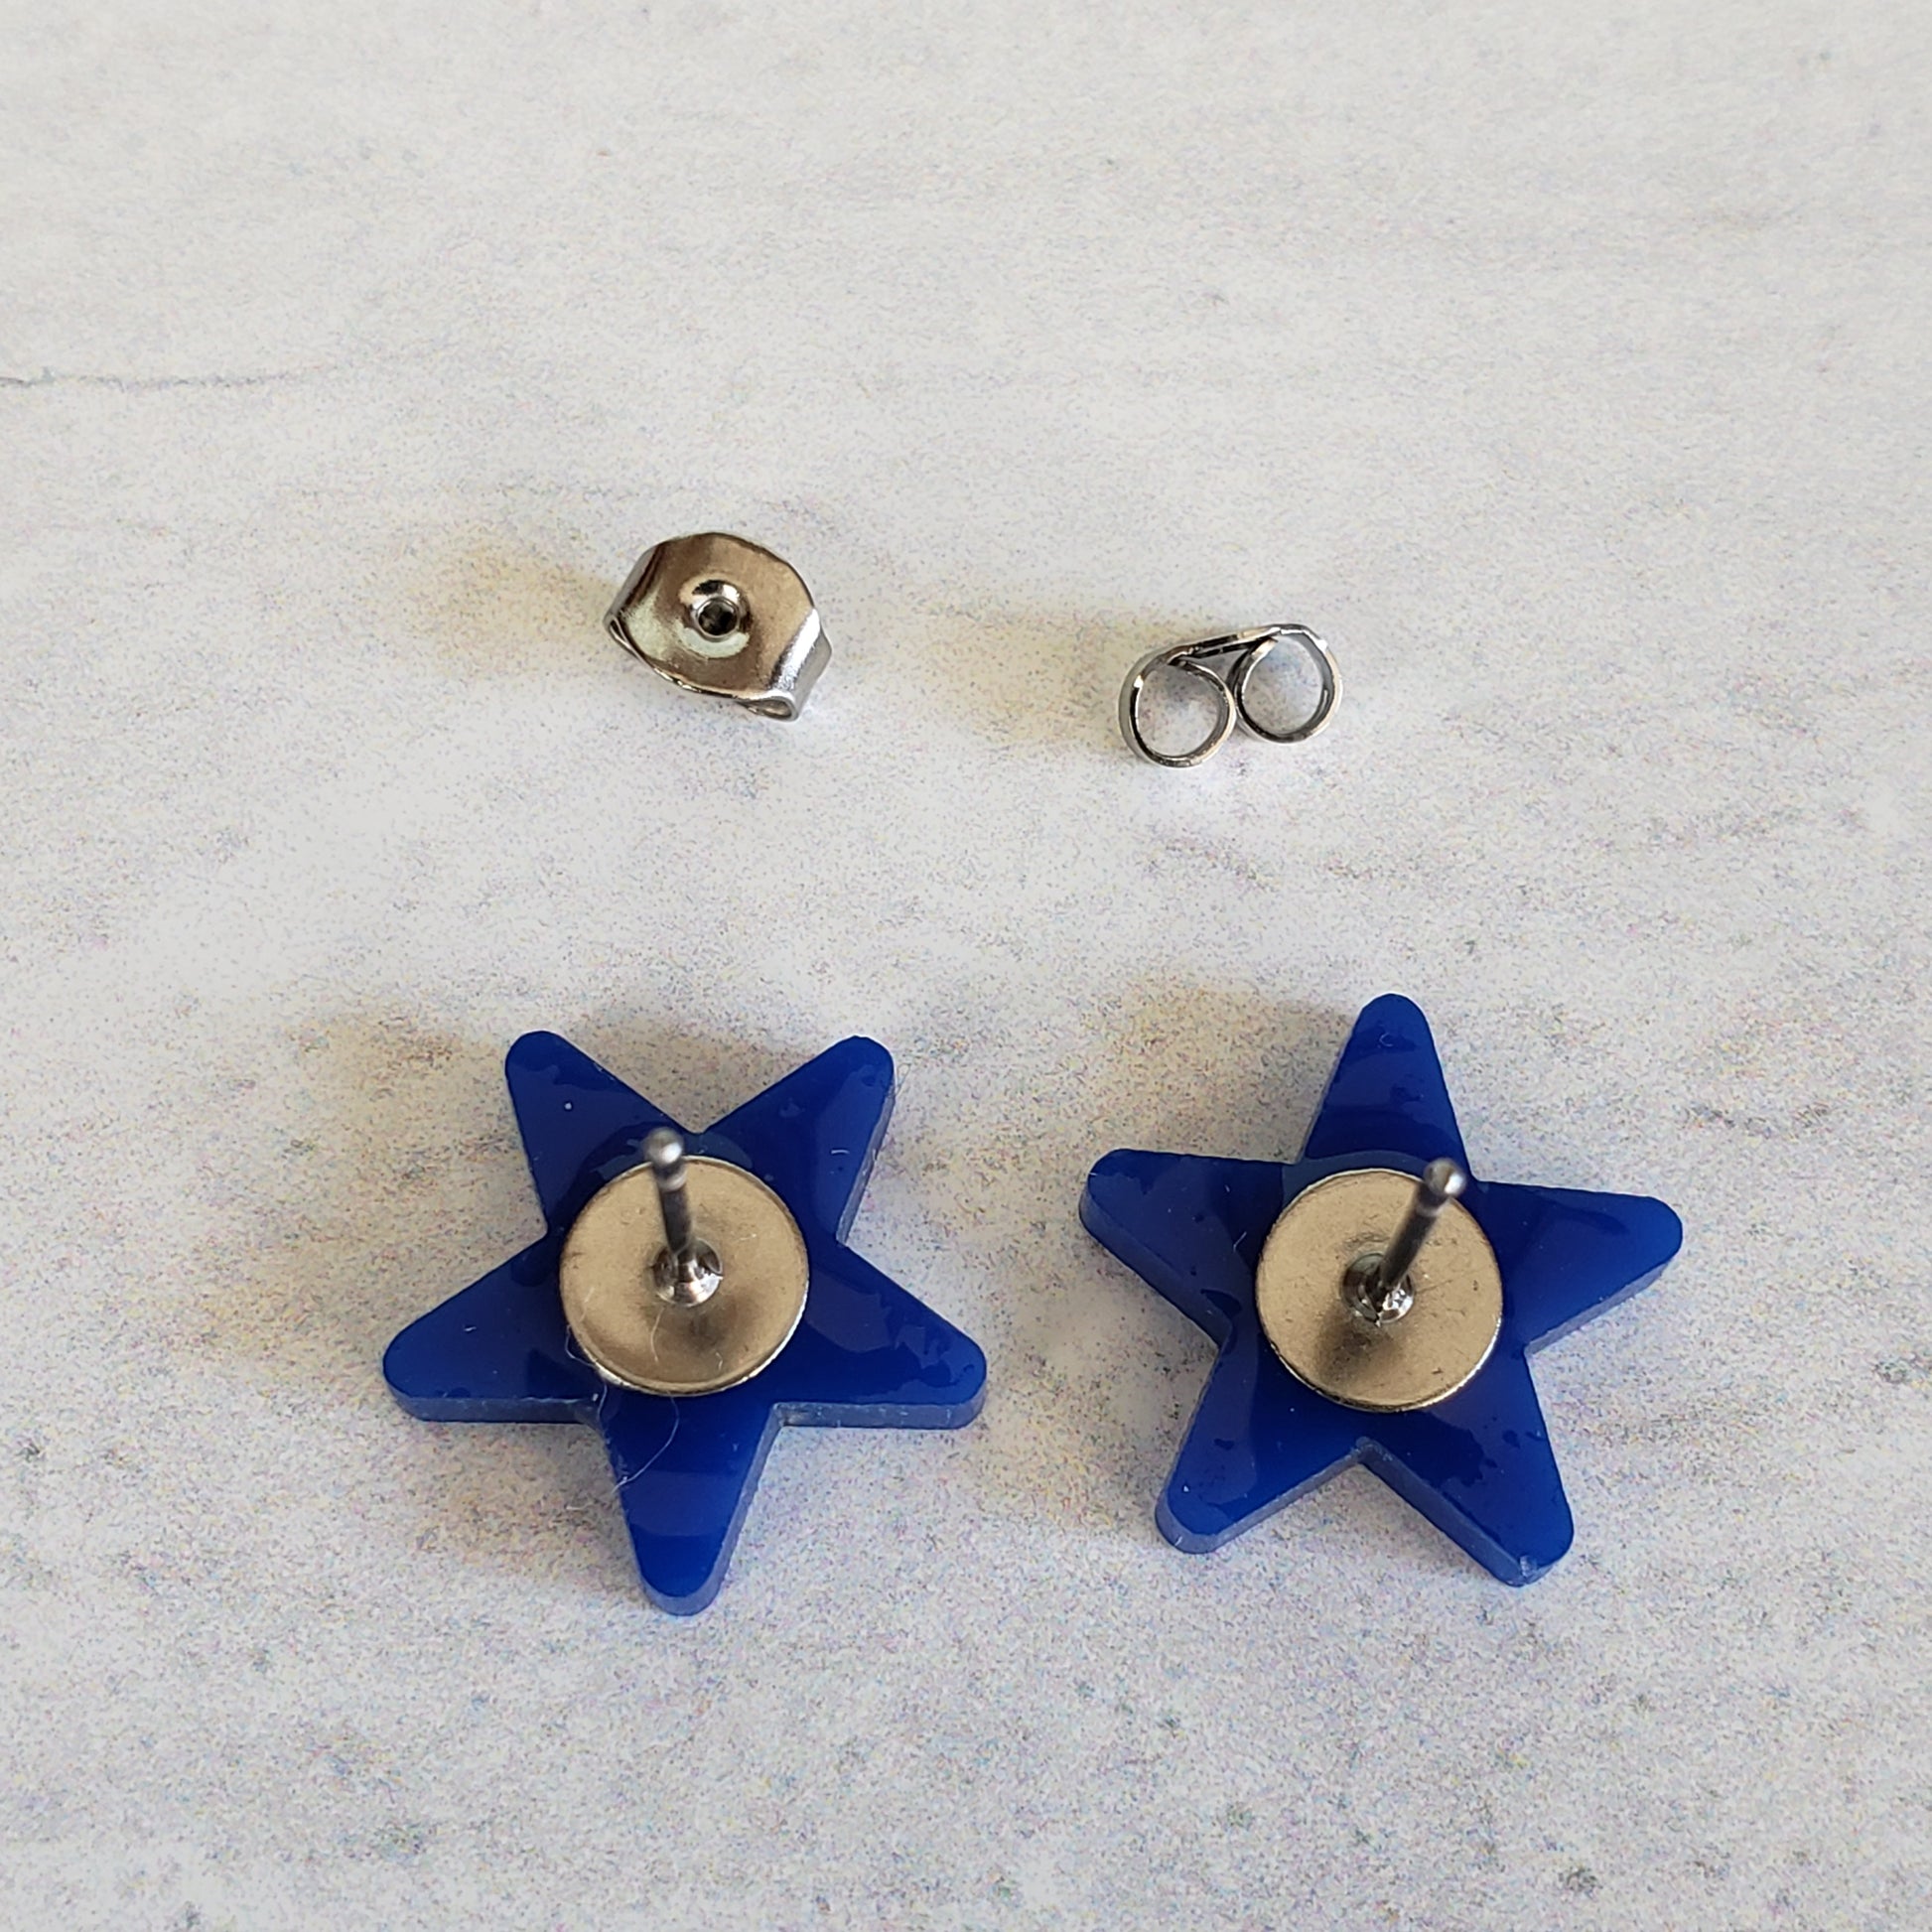 Backside of navy blue star stud earrings showing posts